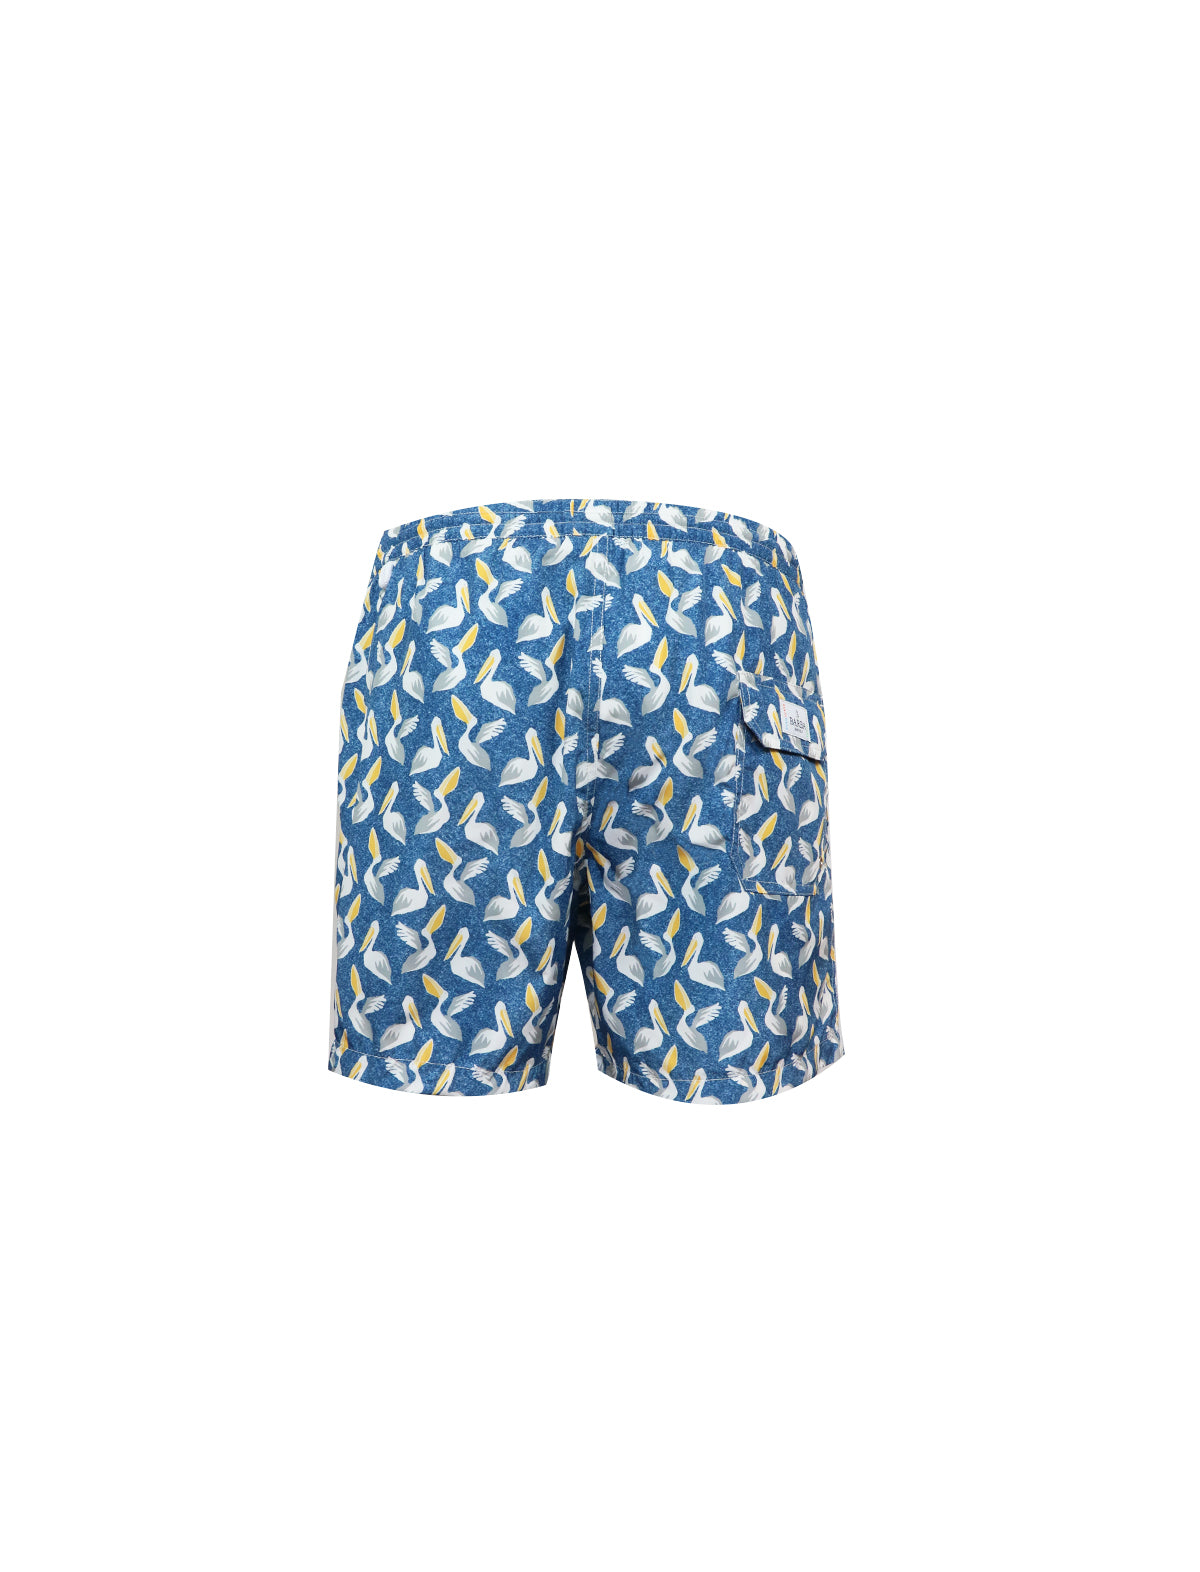 BARBA Napoli Swim Shorts in Blue Pelican Print